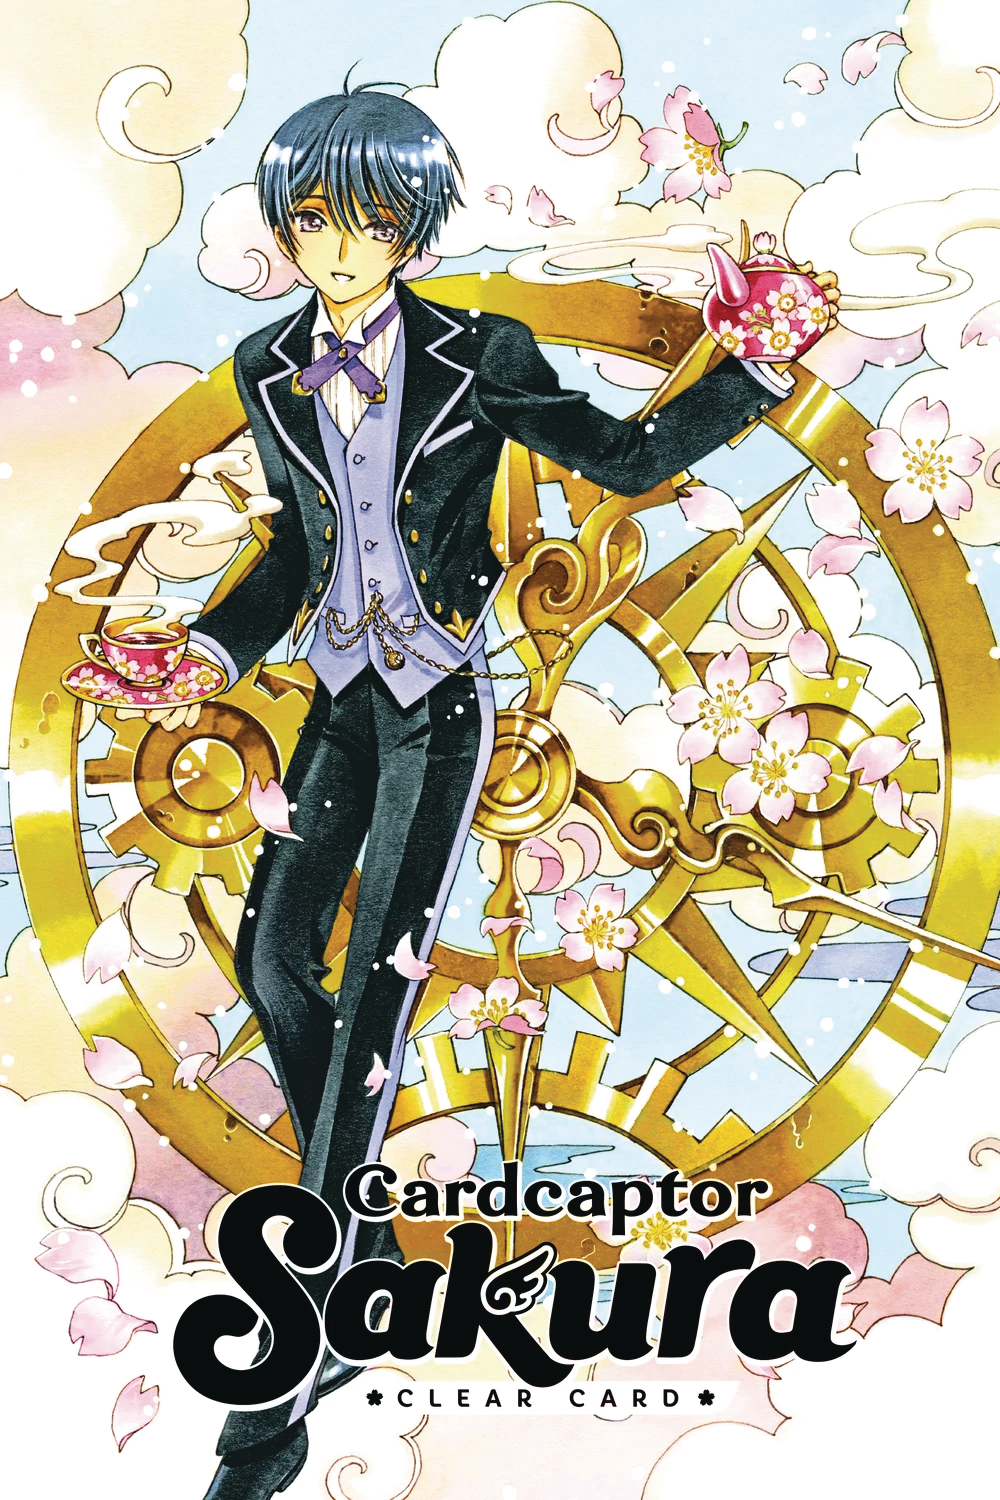 Cardcaptor Sakura Clear Card Manga Volume 12